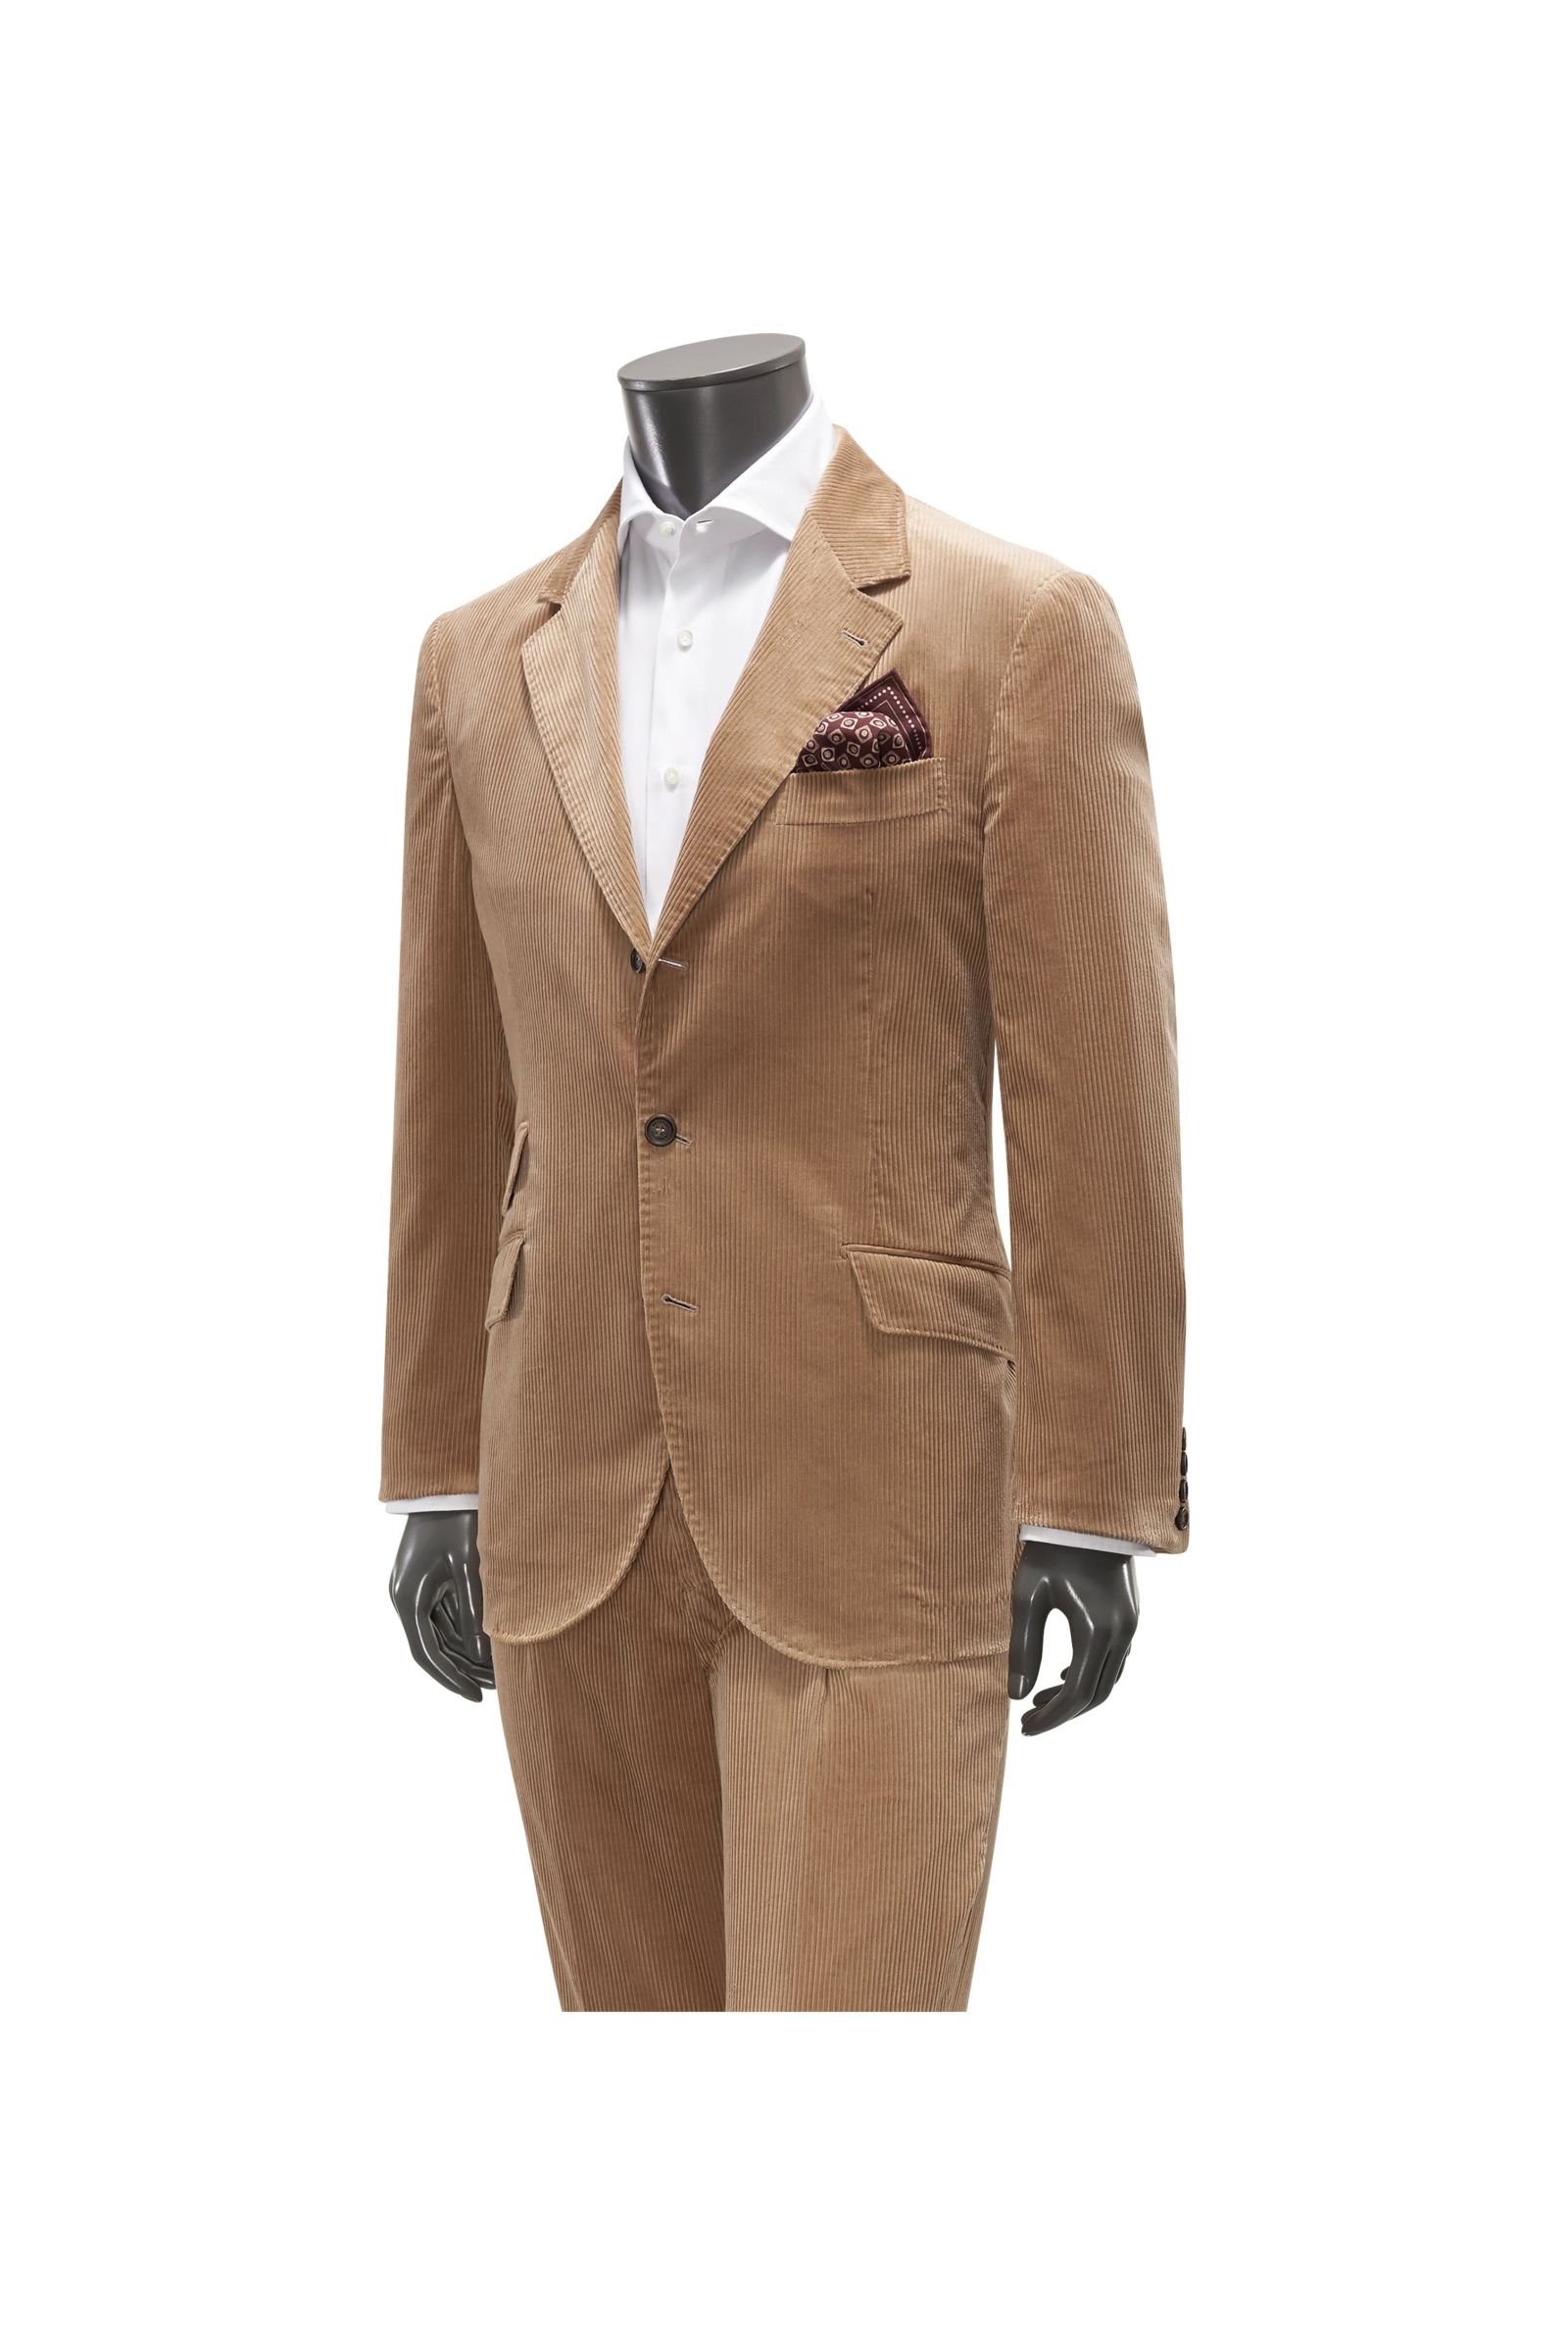 Corduroy suit light brown